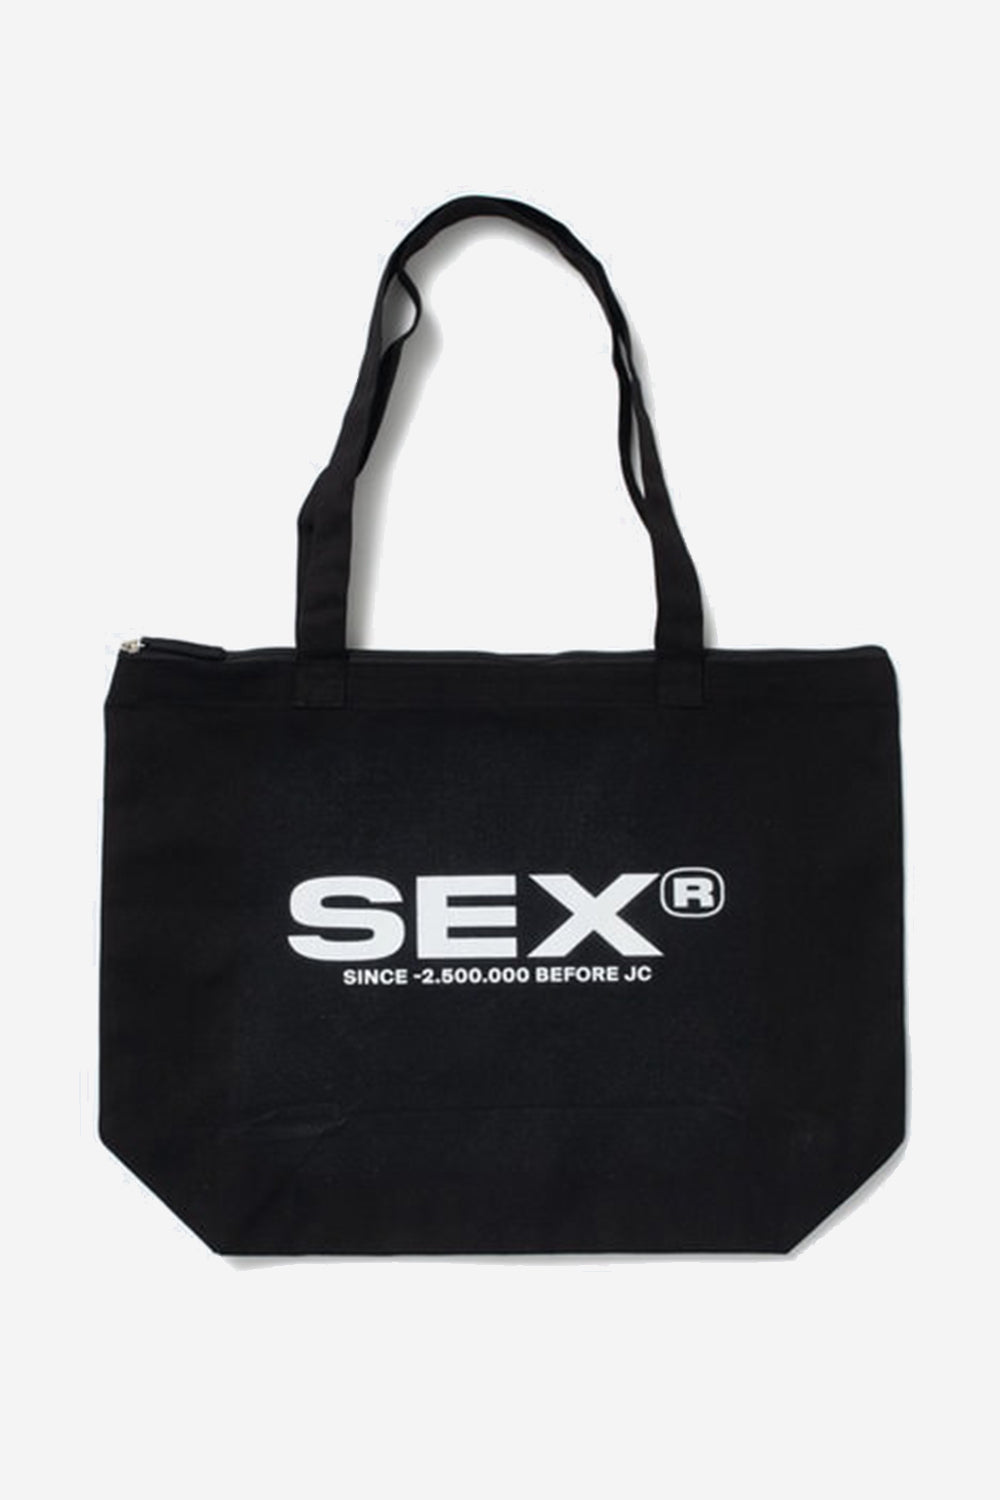 Sex pack